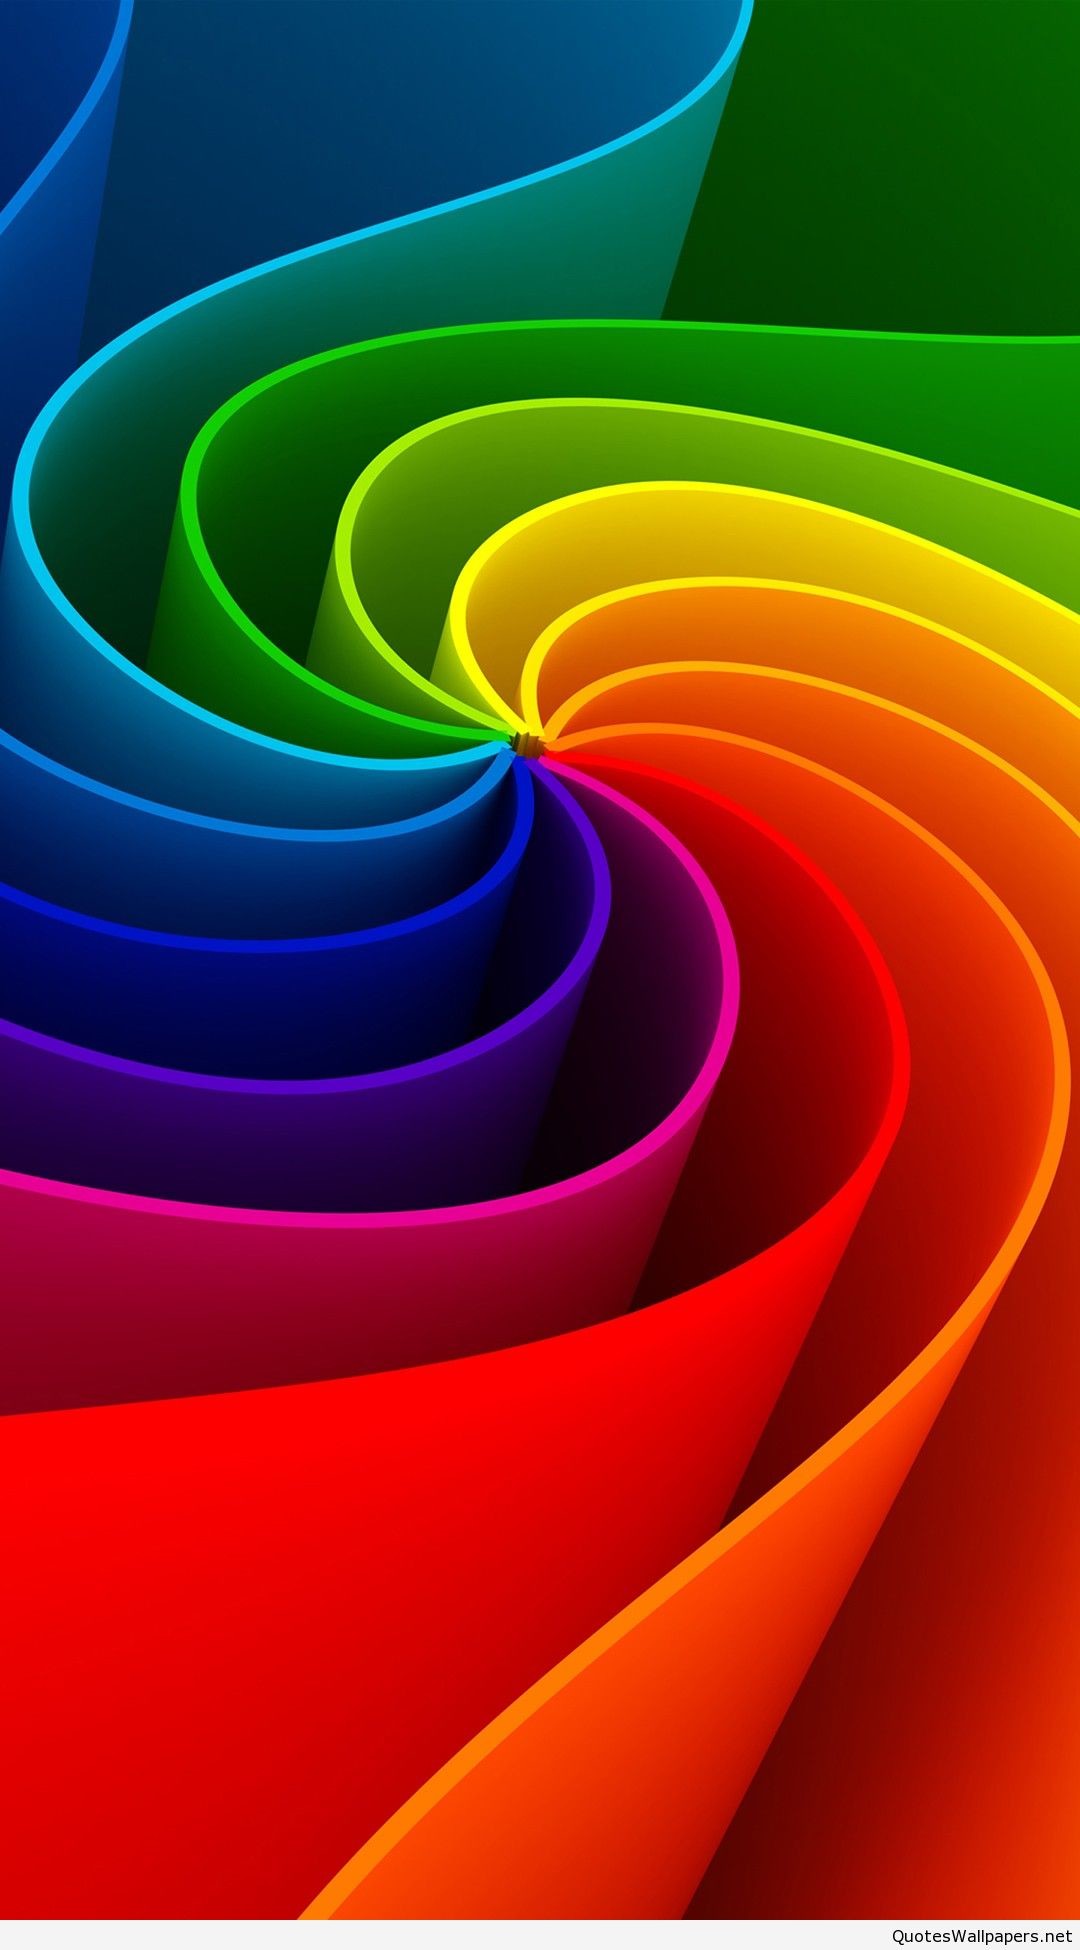 1080x1950 colorful 3d swirl iphone 6 plus wallpaper - download retina hd iphone 6  plus wallpapers-